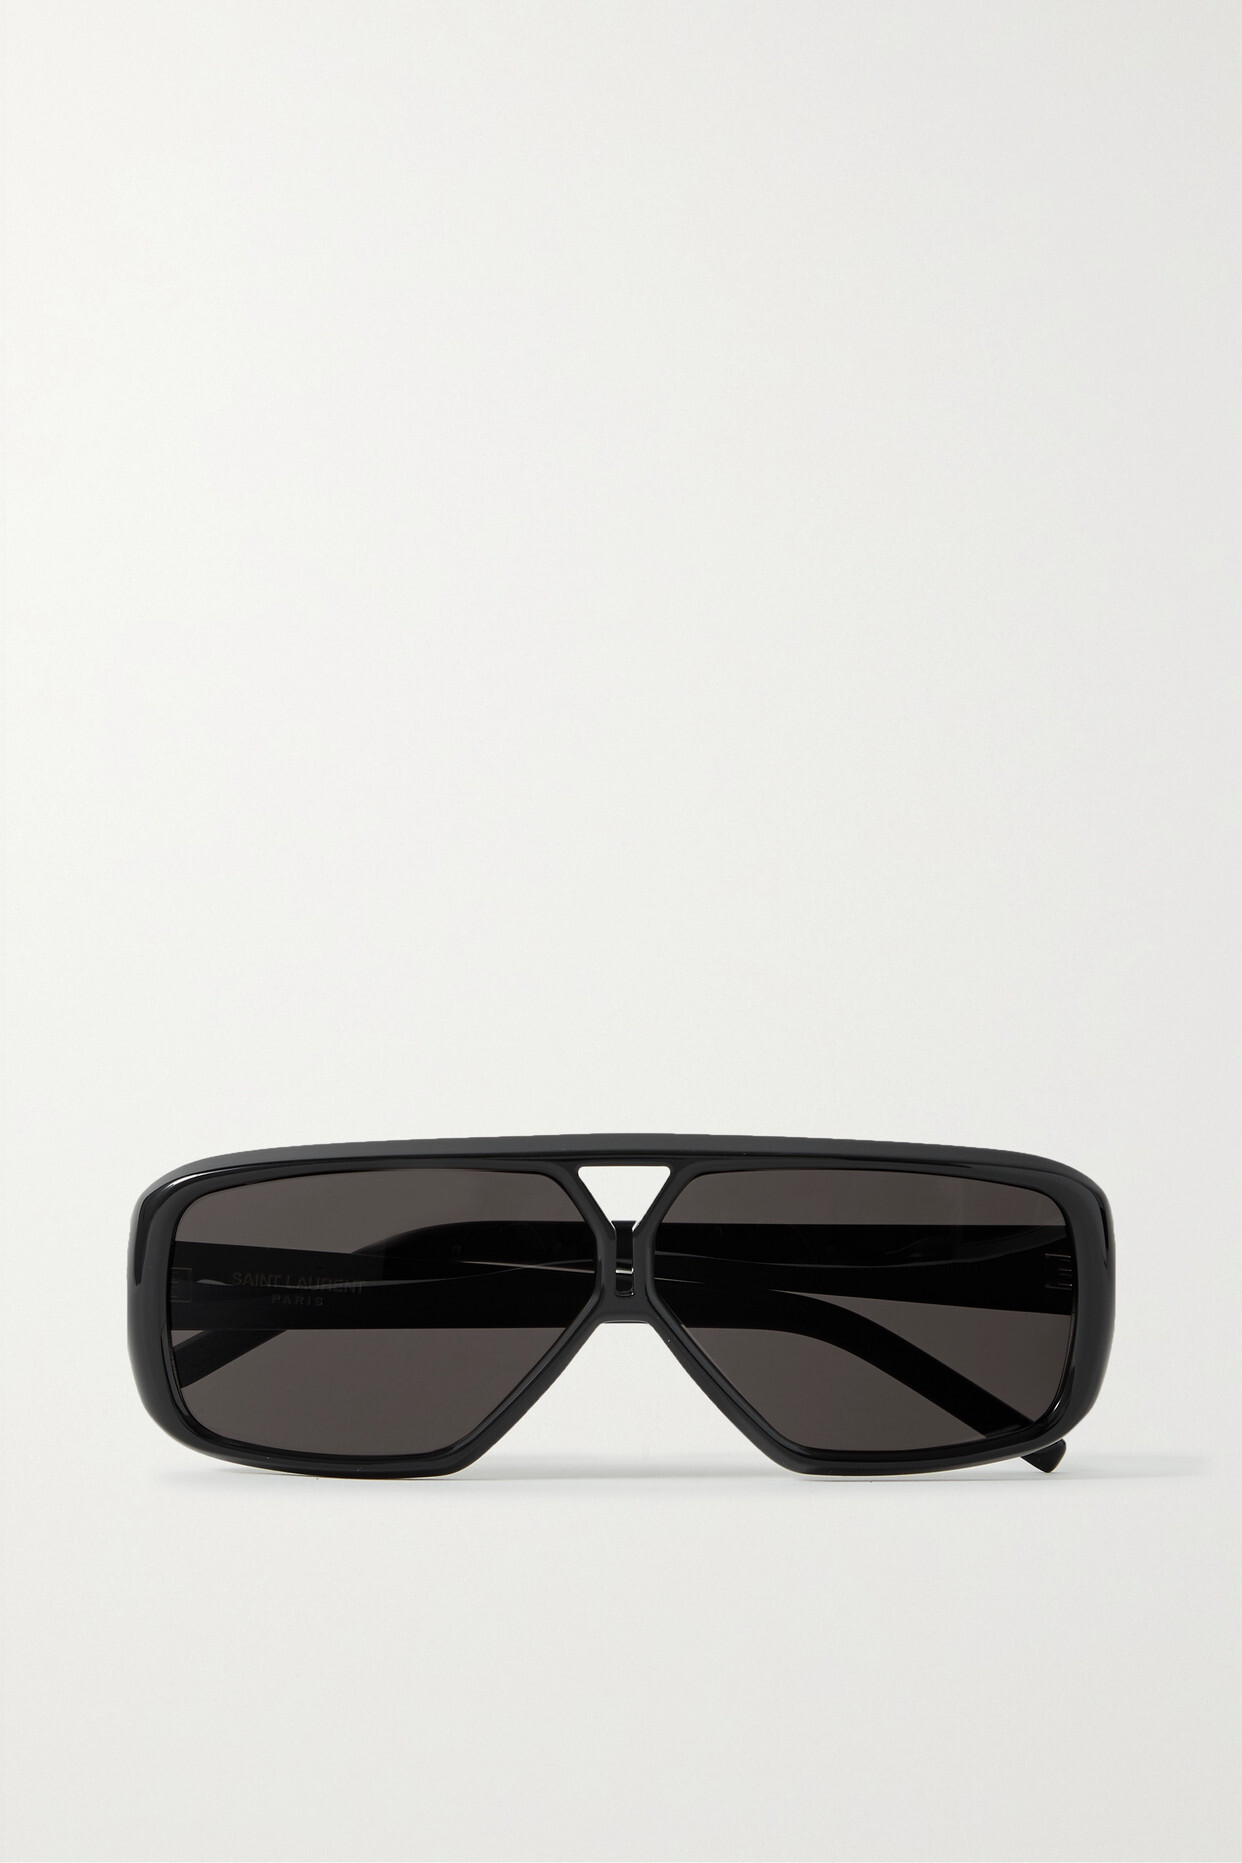 SAINT LAURENT Eyewear - Ysl Aviator-style Acetate Sunglasses - Black